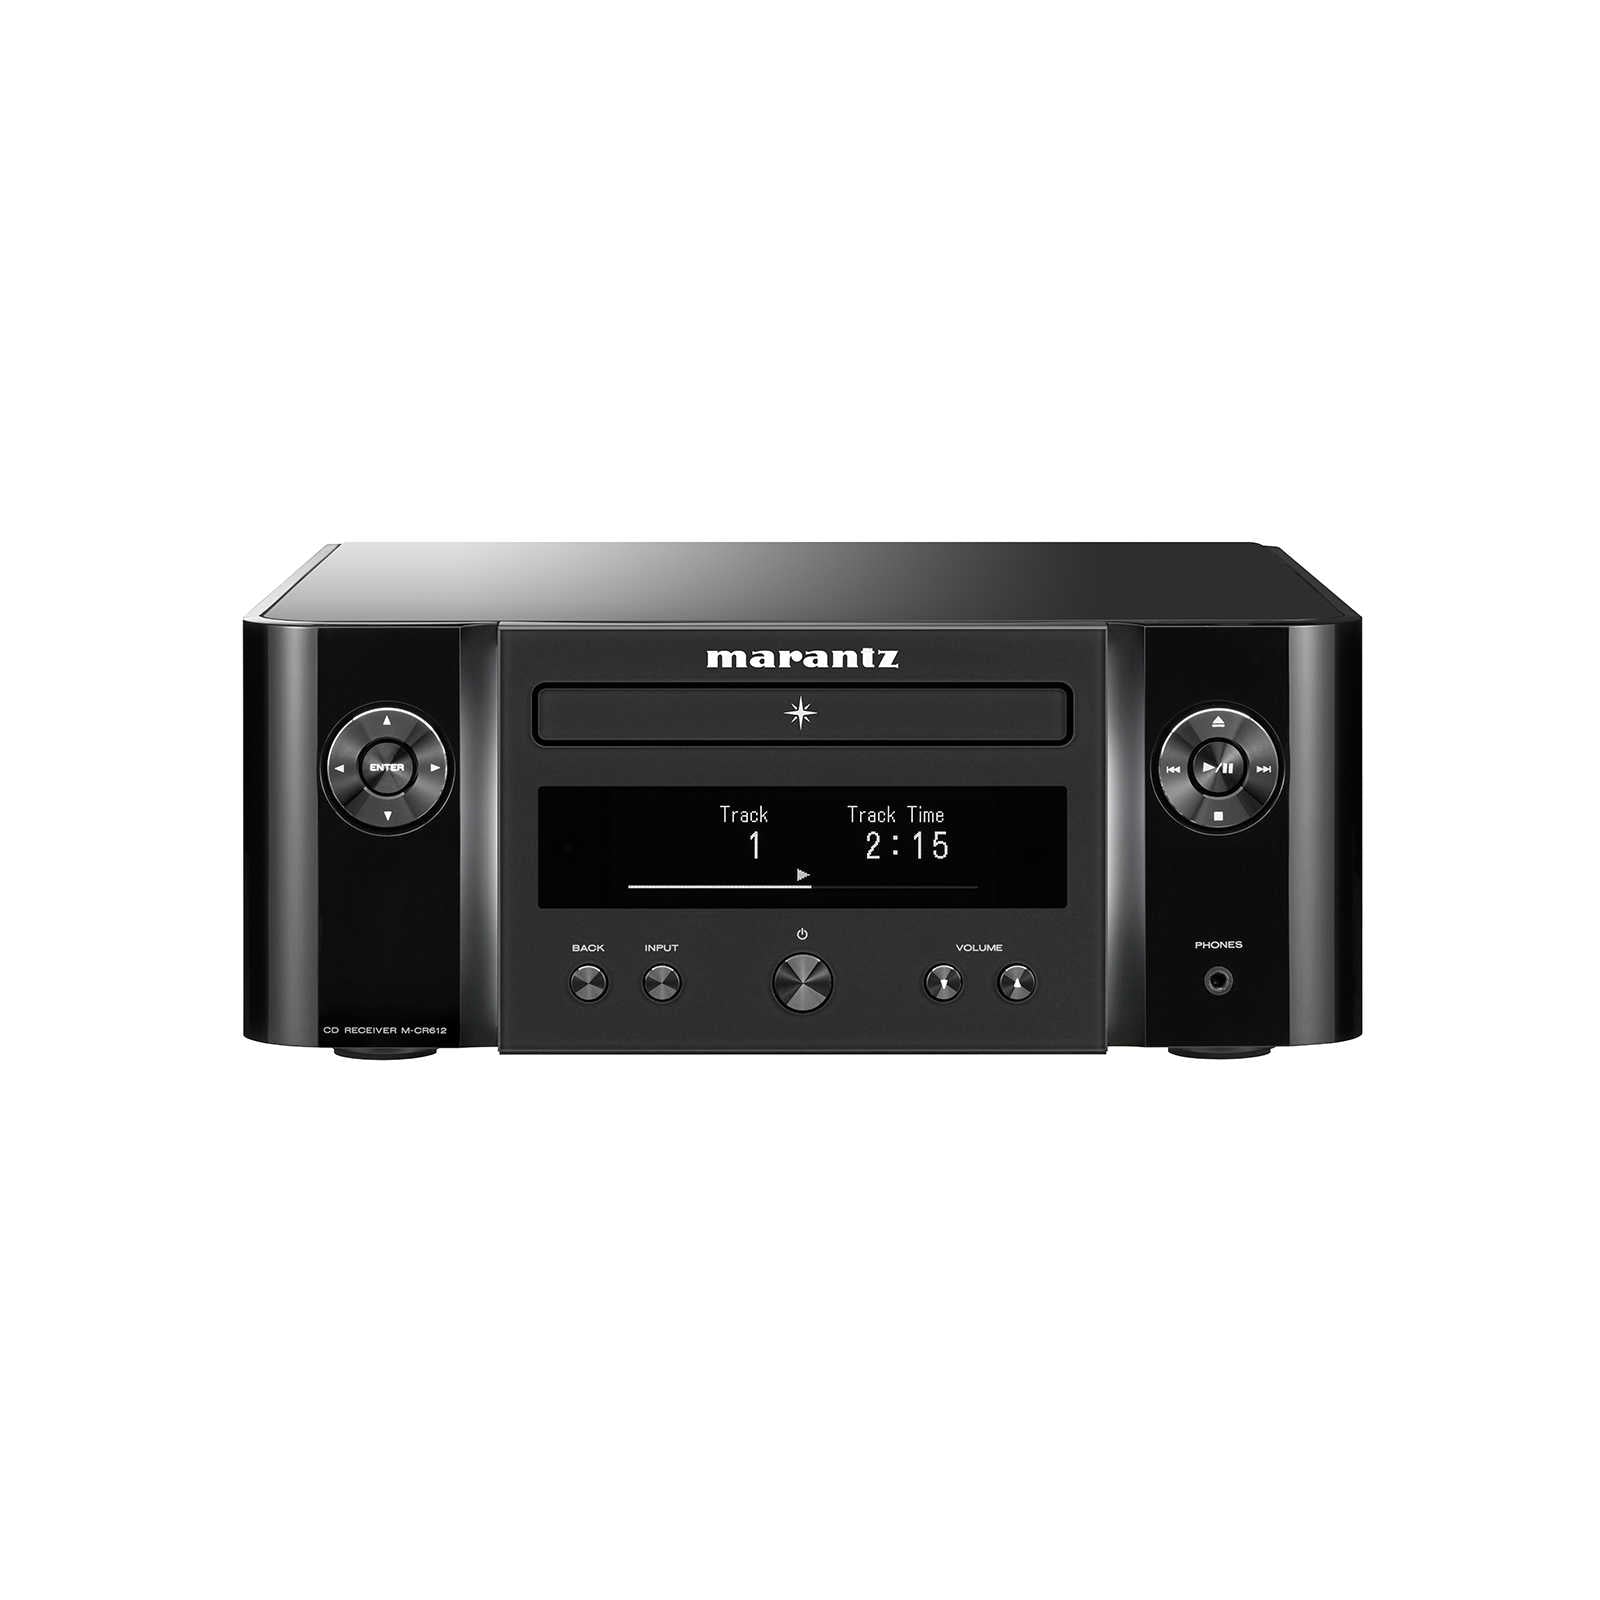 Marantz CD-6007 - CD player Online – Bombay Audio